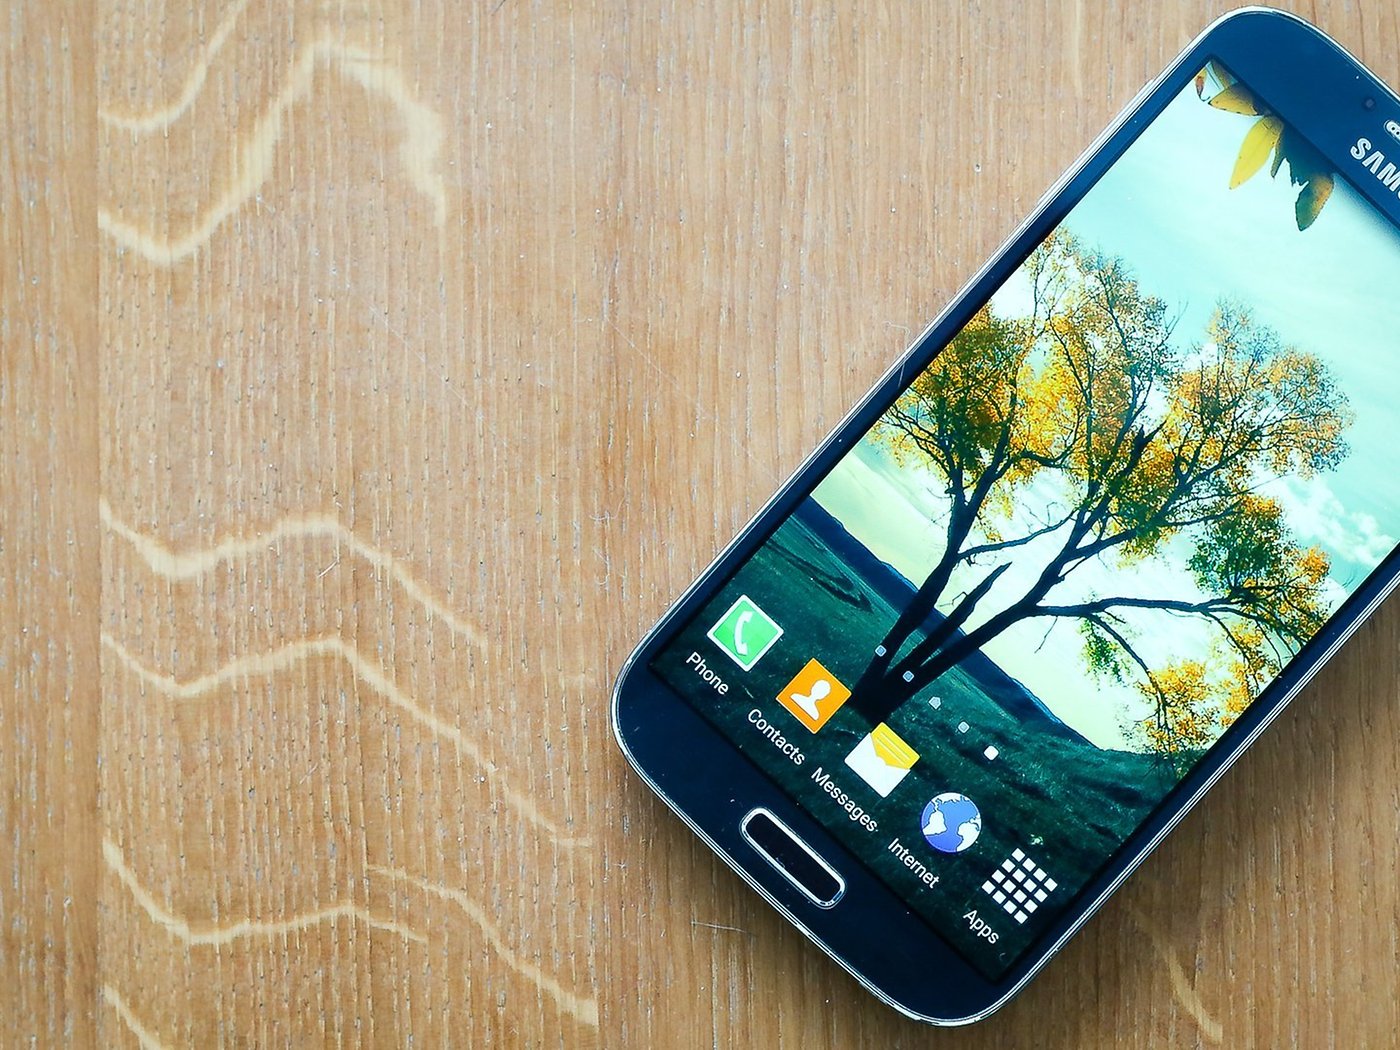 ongeduldig schouder Conflict Samsung Galaxy S4 Android update news | NextPit